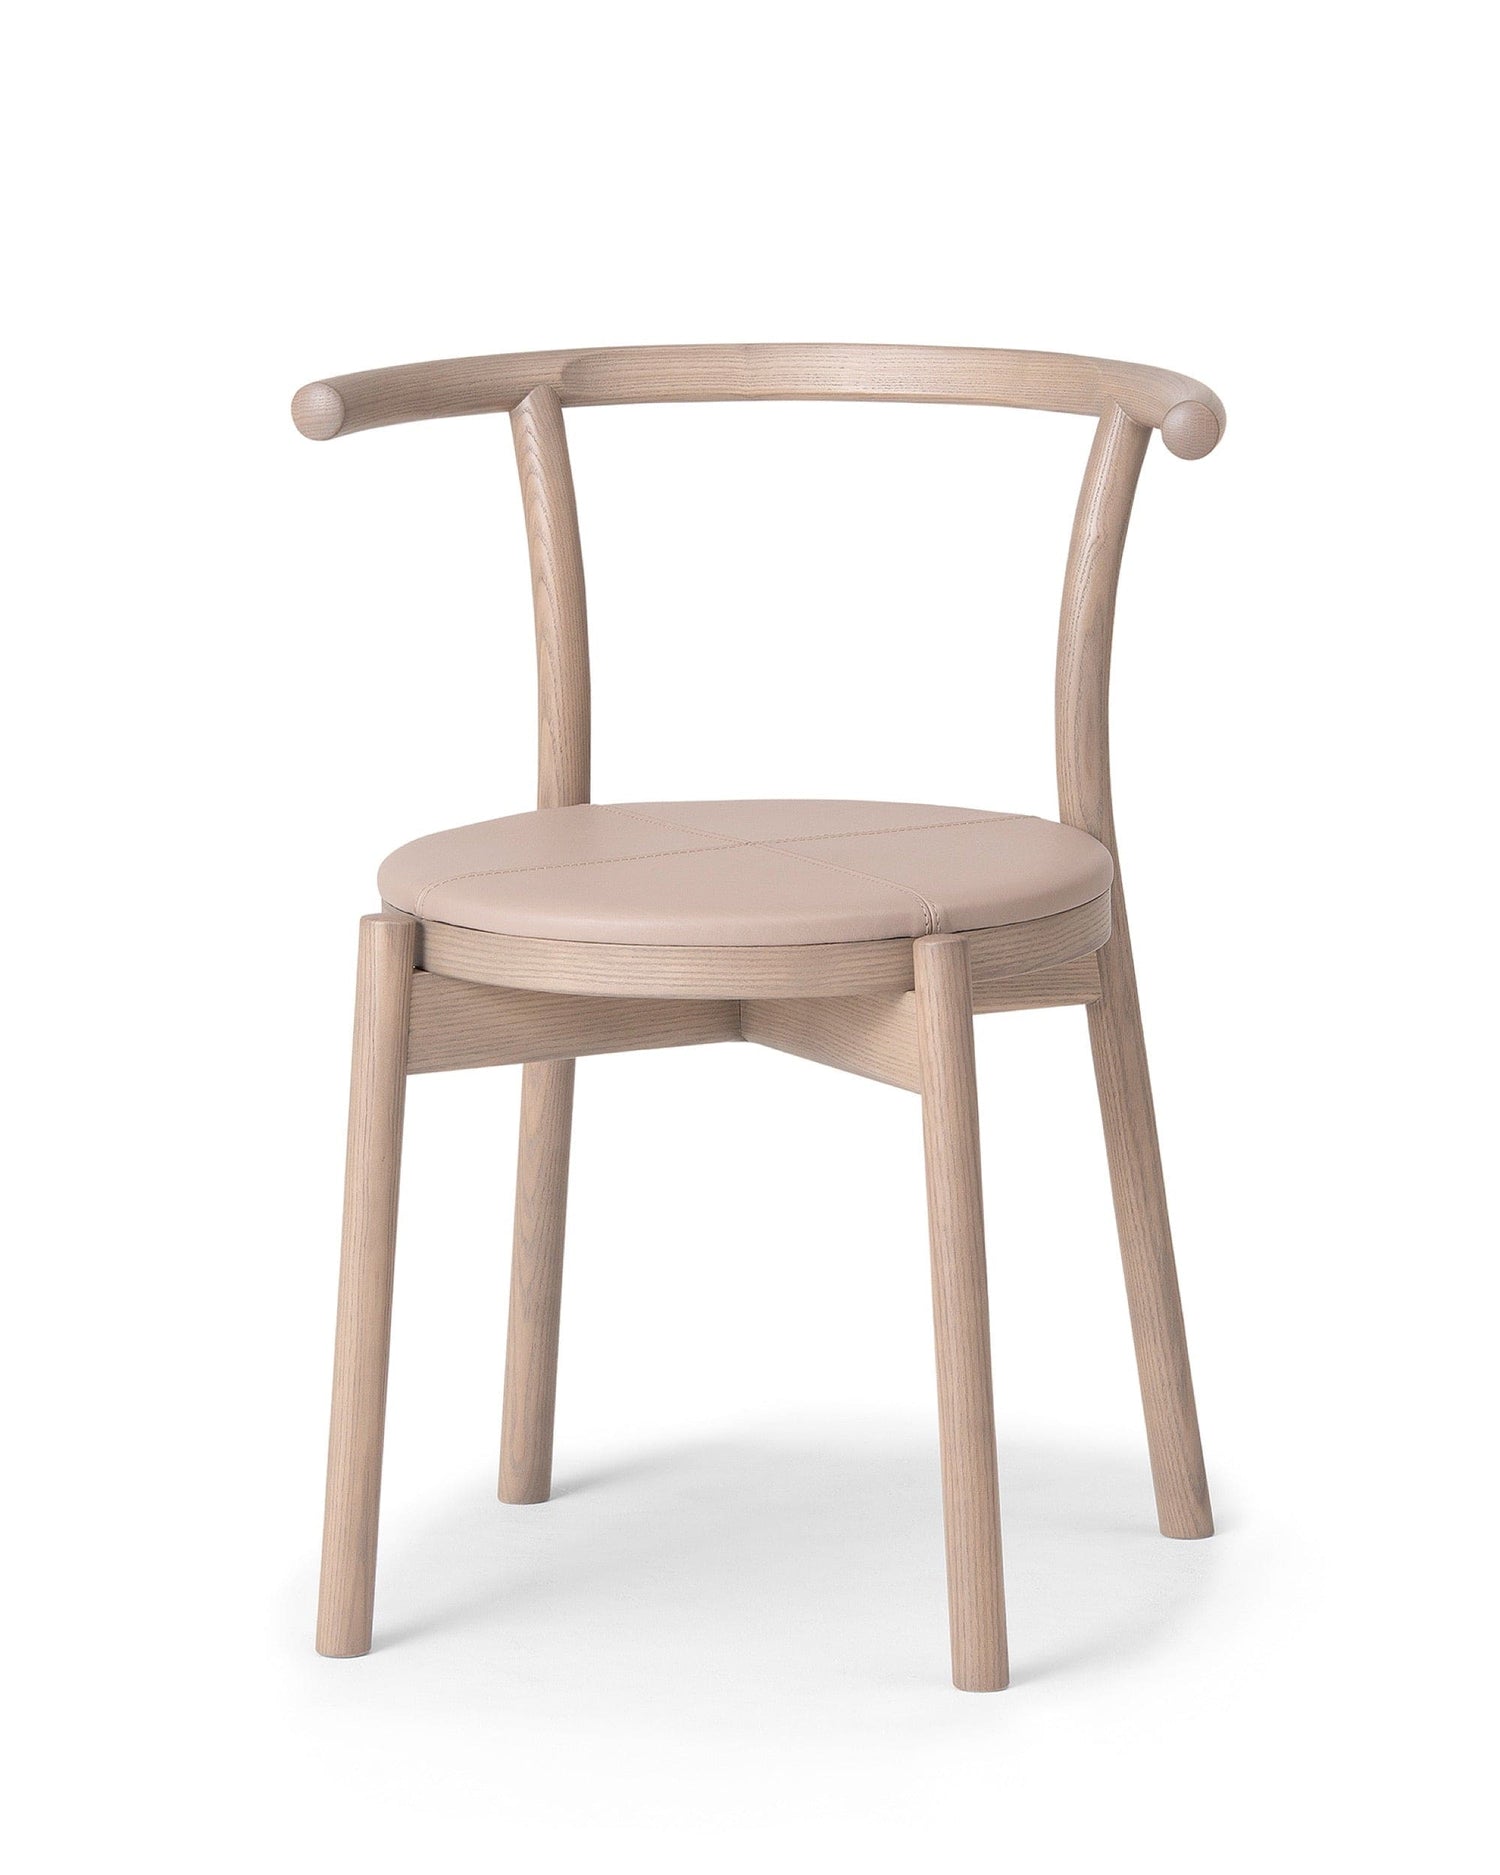 KOTAN Chair (Upholstered Seat), Japanese Ash Gray Wash